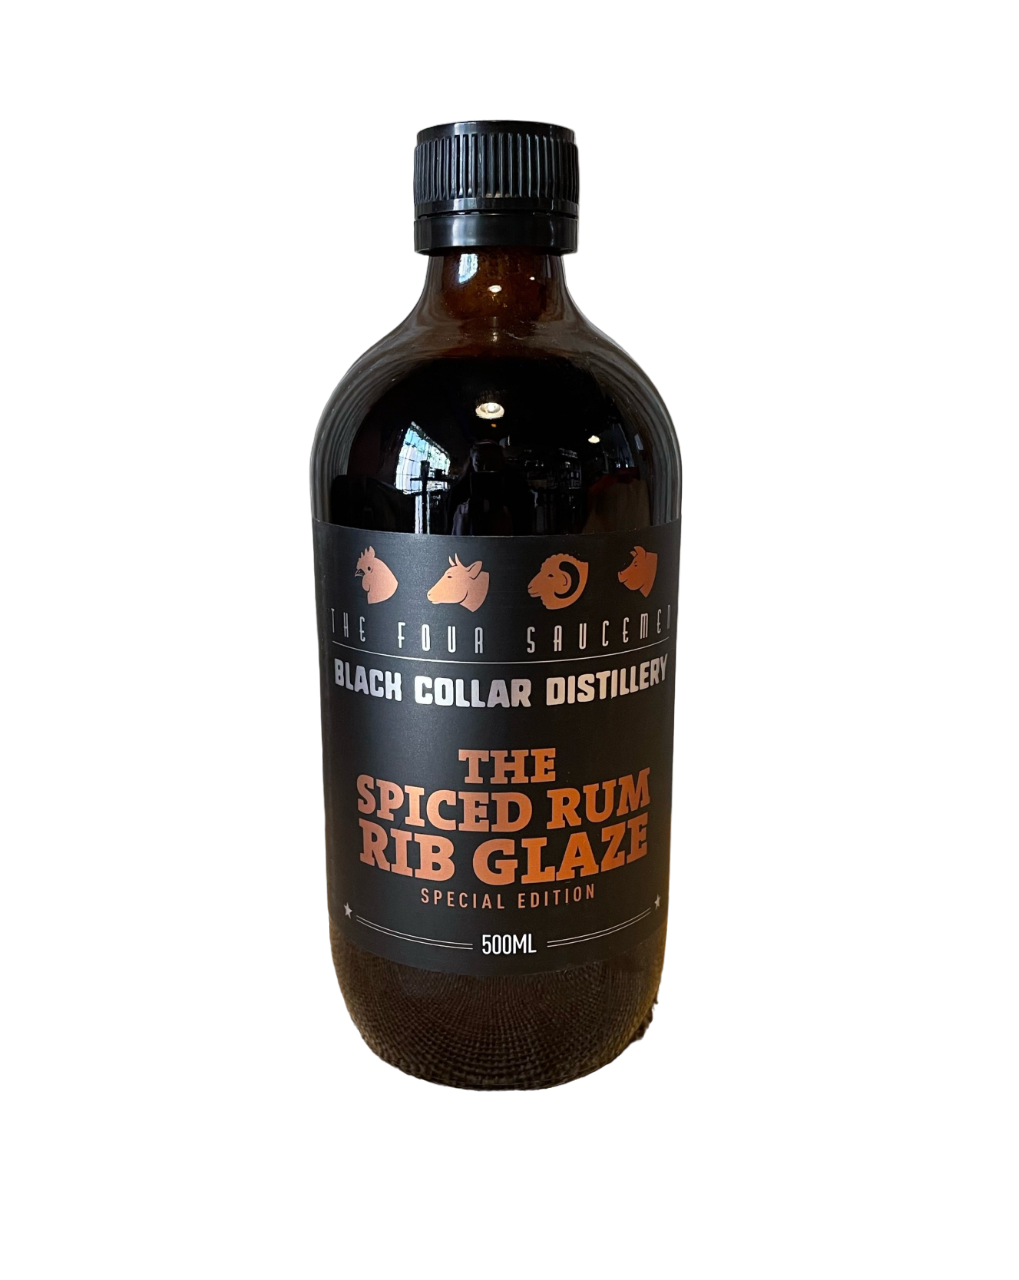 The Four Saucemen - The Spiced Rum Rib Glaze 500ml